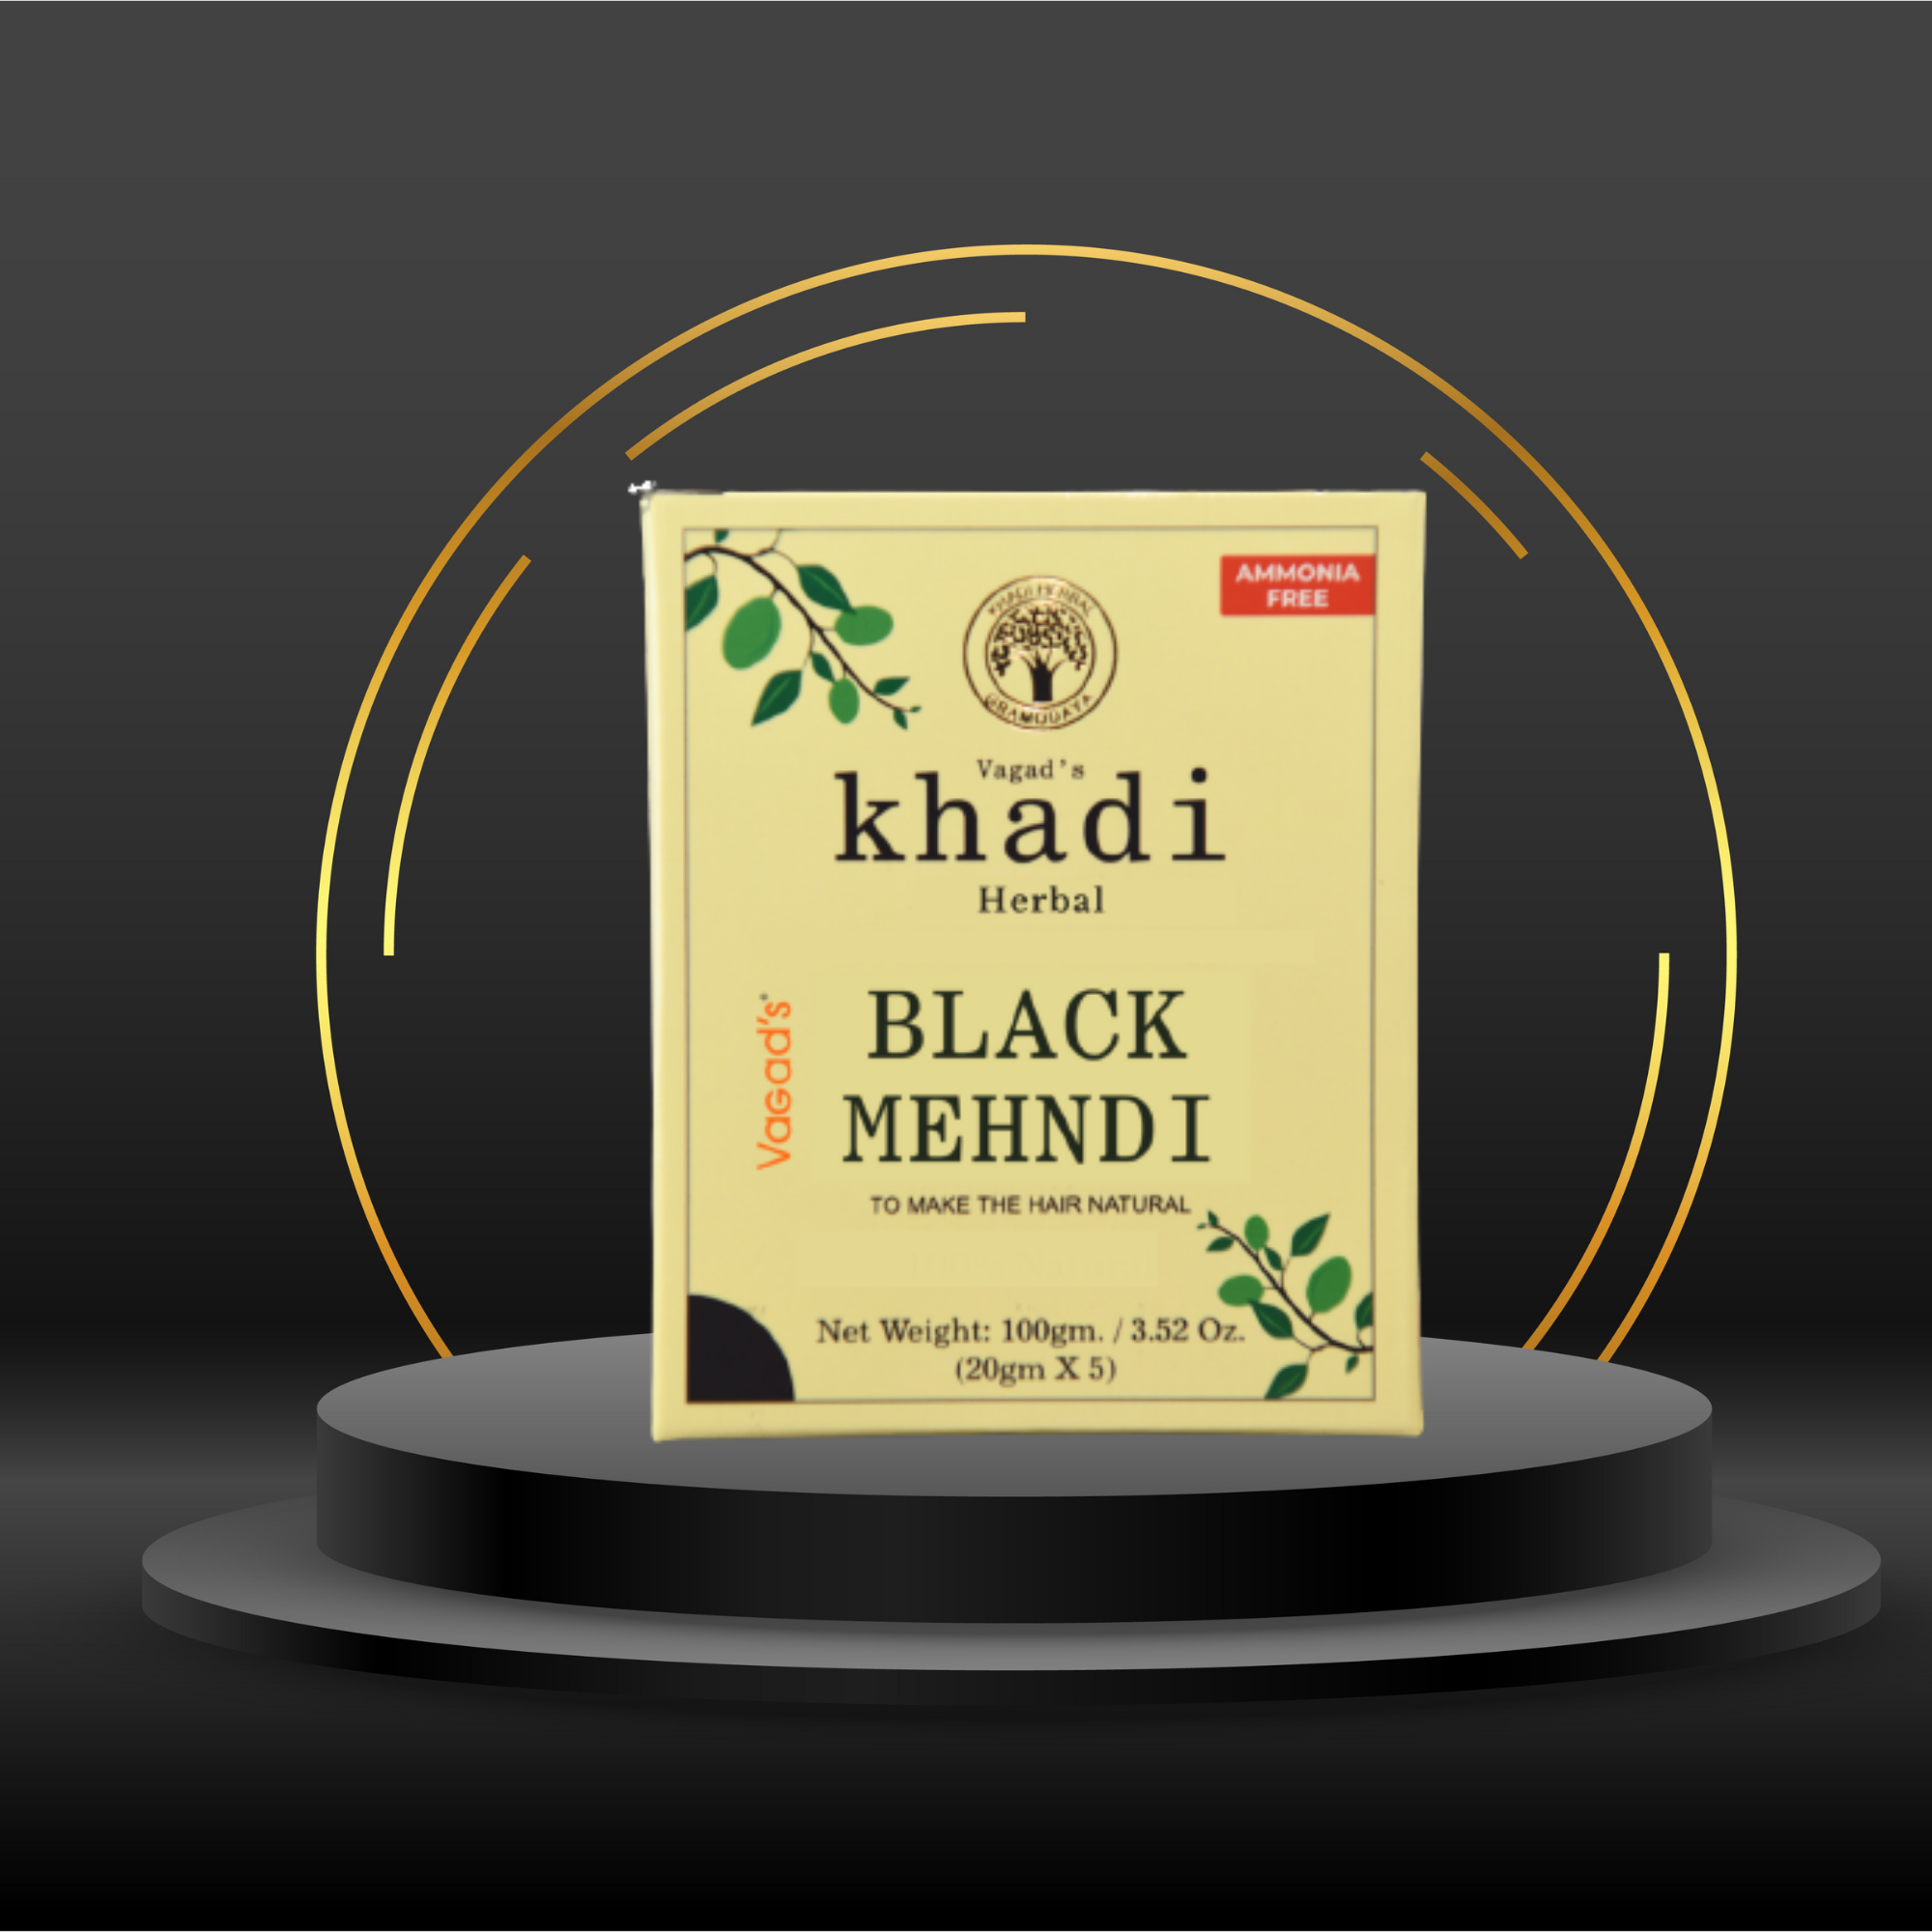 Vagad's Khadi Herbal Gramodaya Pure Natural Black Mehndi For Hair With Goodness of Neem For Long lasting Natural Hair Colour